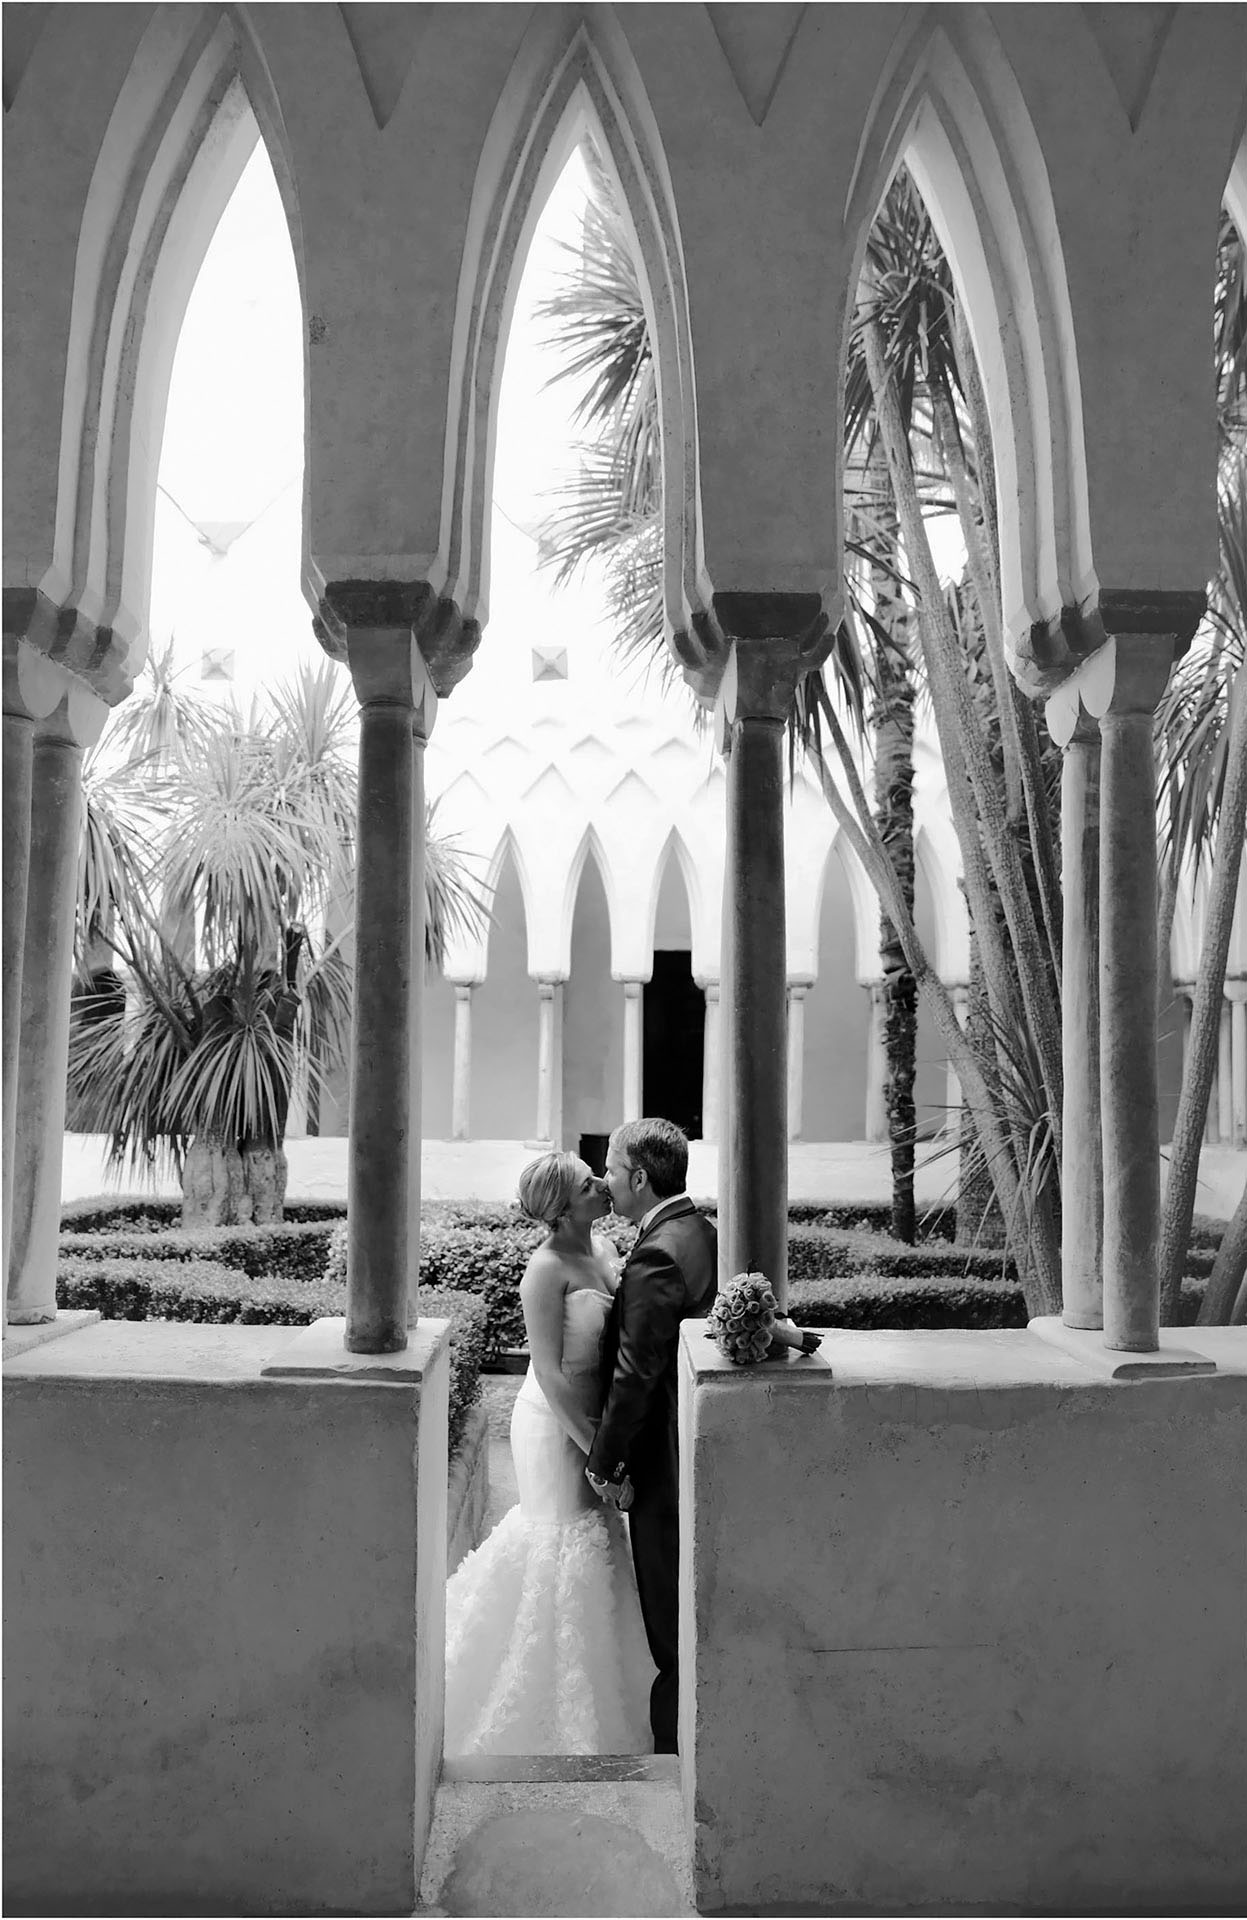 Matrimonio Costiera Amalfitana Hotel Santa Caterina Location Duomo Chiesa Cathedral Chiostro Del Paradiso Cloister of Paradise Claudia Francese Photography Sisters